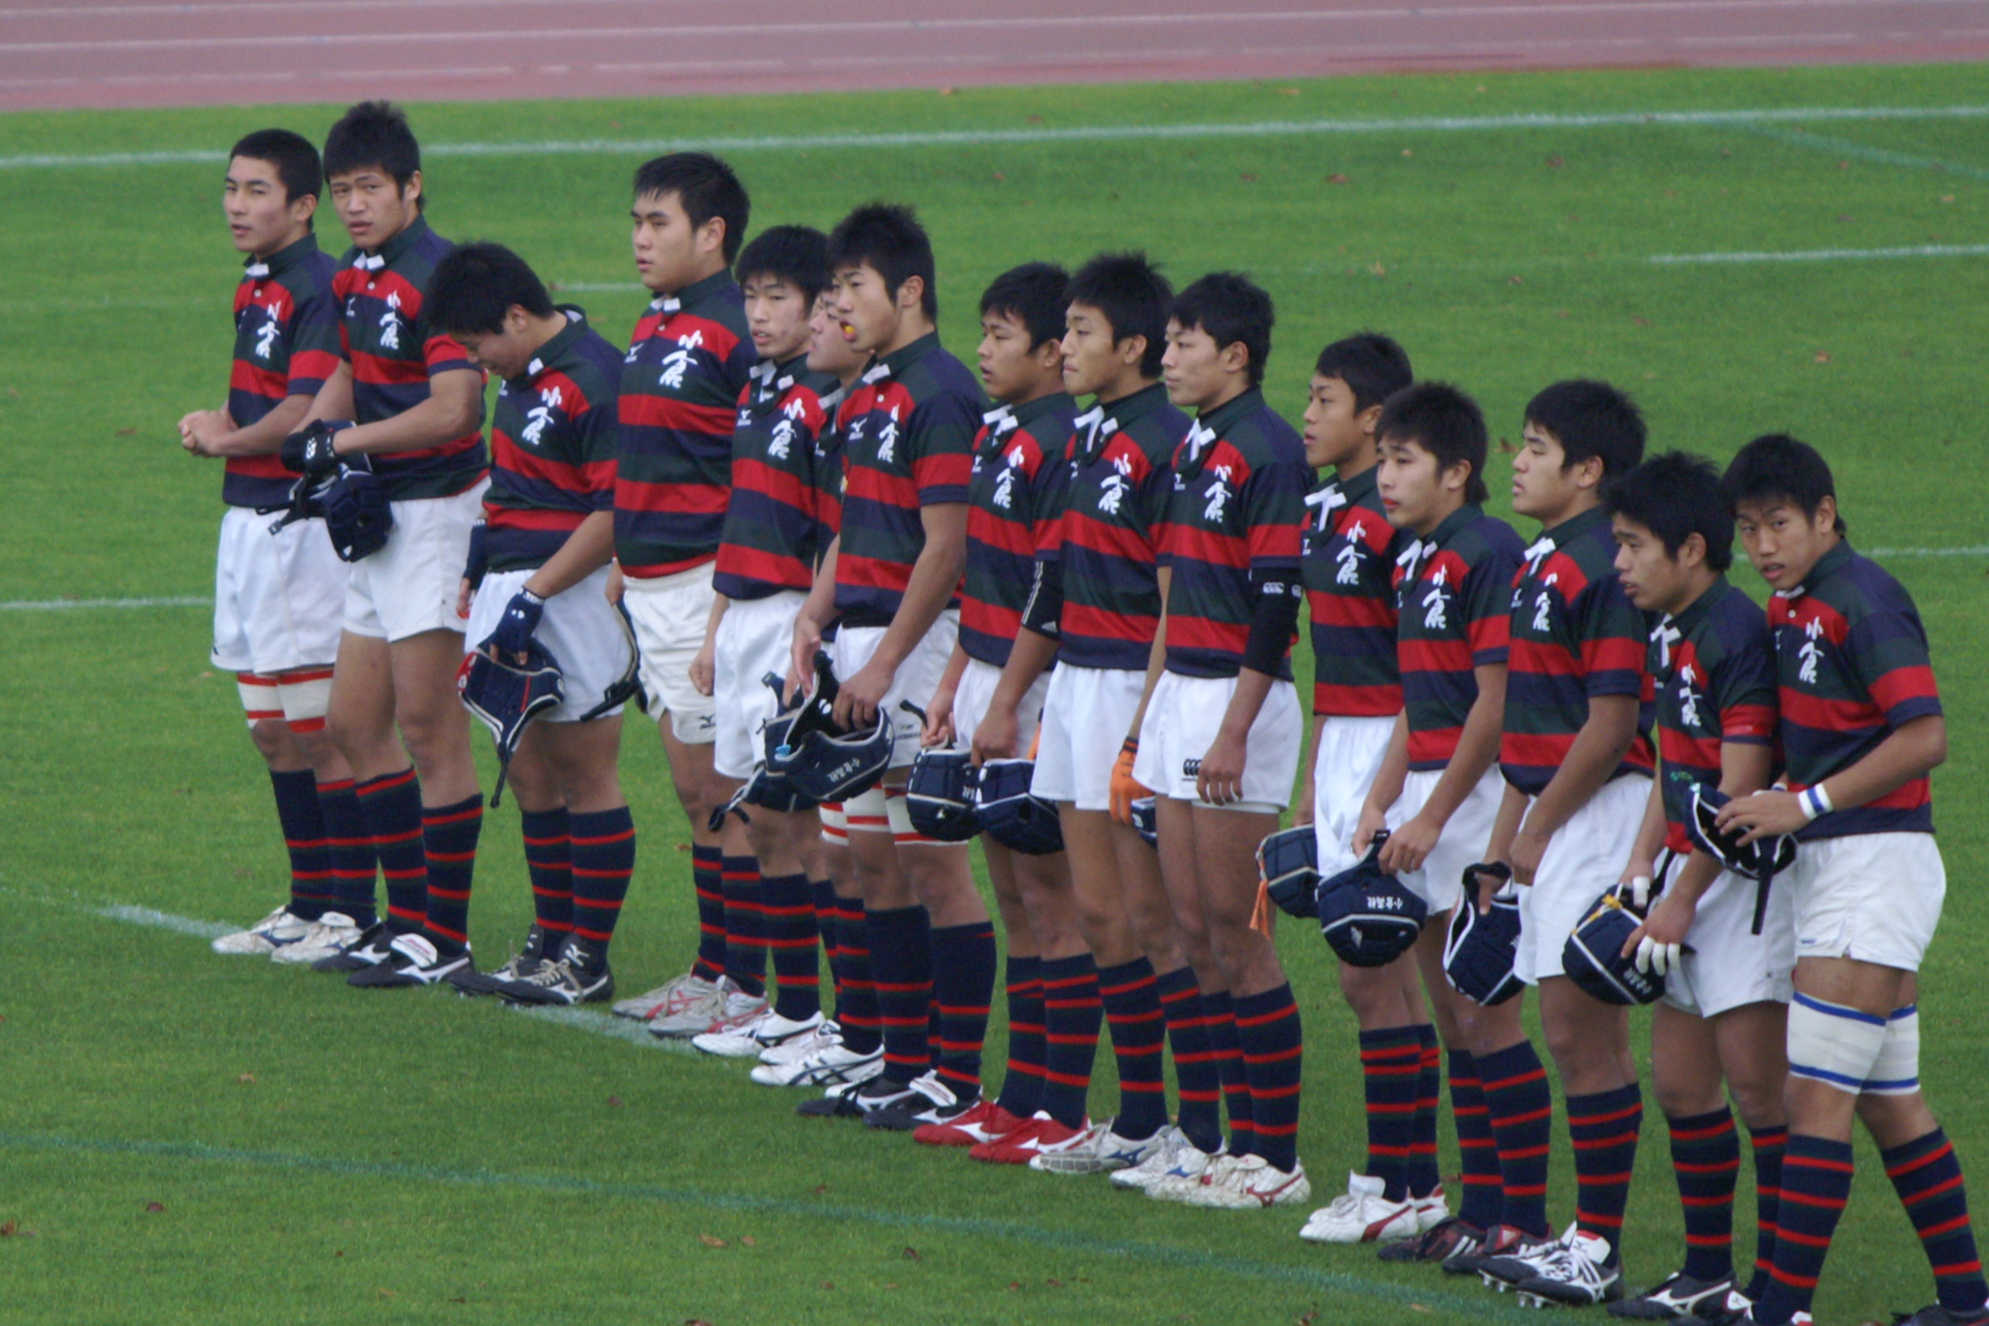 http://kokura-rugby.sakura.ne.jp/2009.12.5-1.JPG